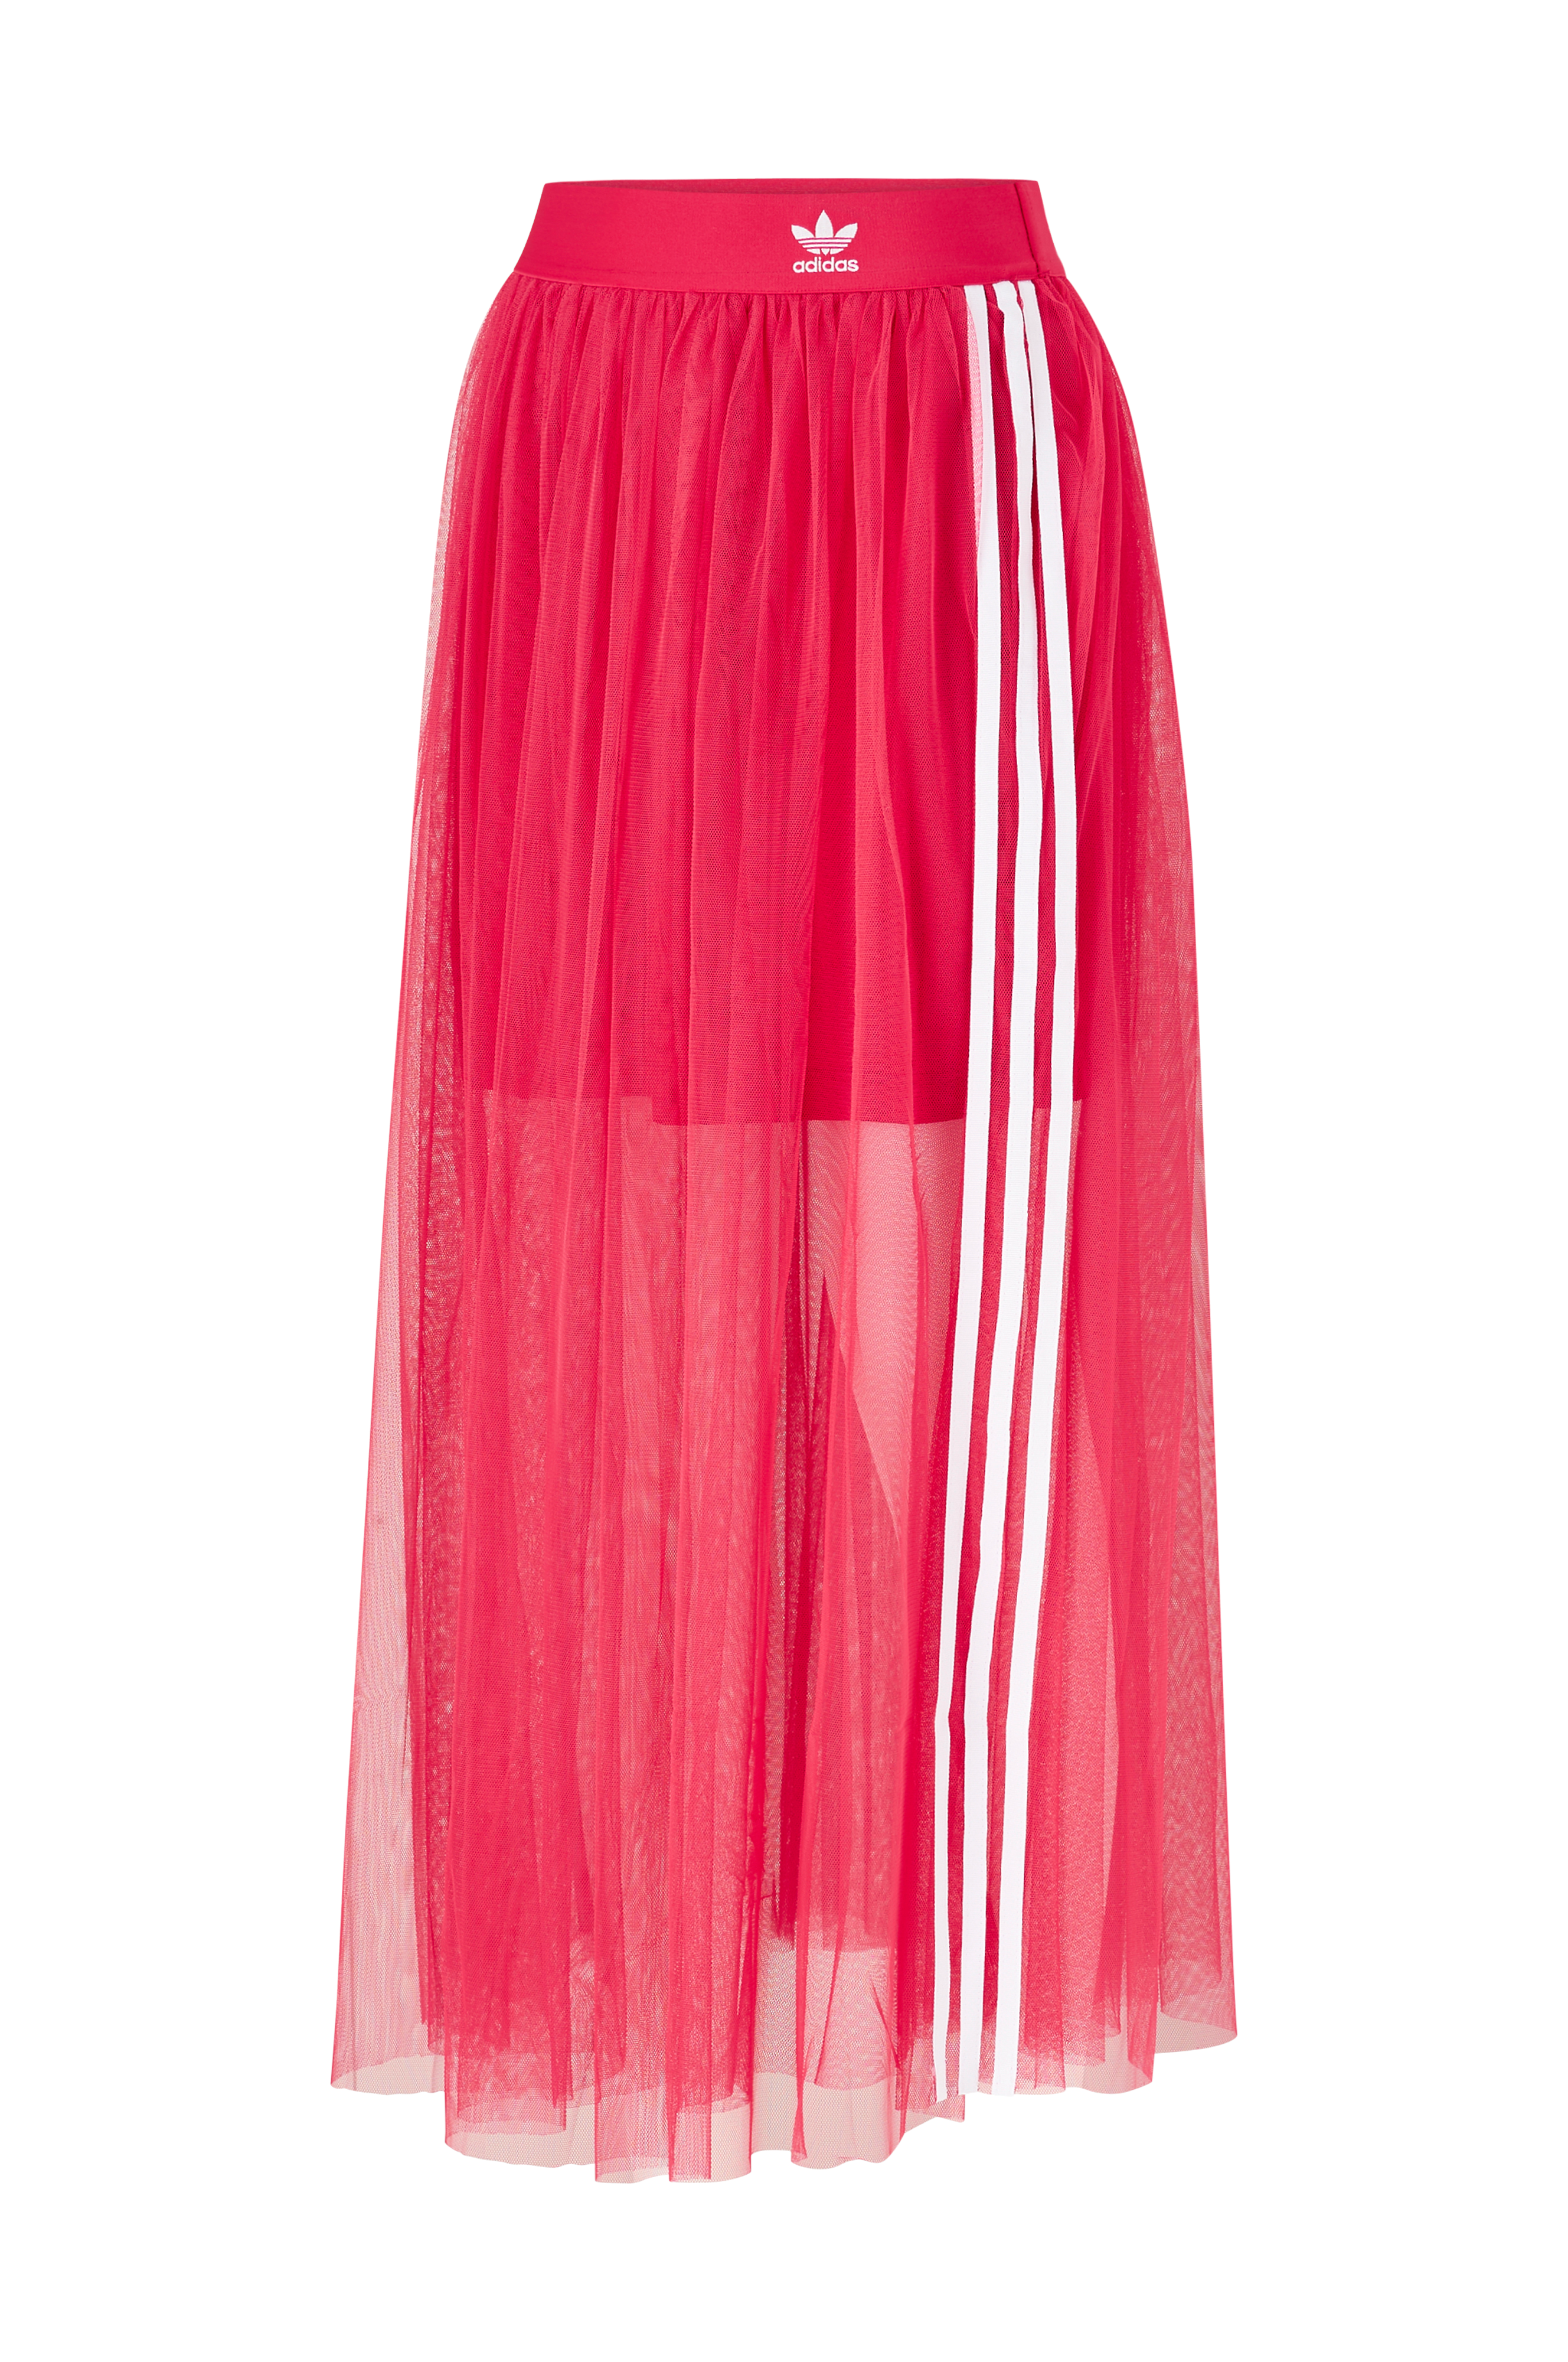 adidas Originals Tylnederdel Tulle Skirt - Rosa Maxinederdeler | Ellos.dk